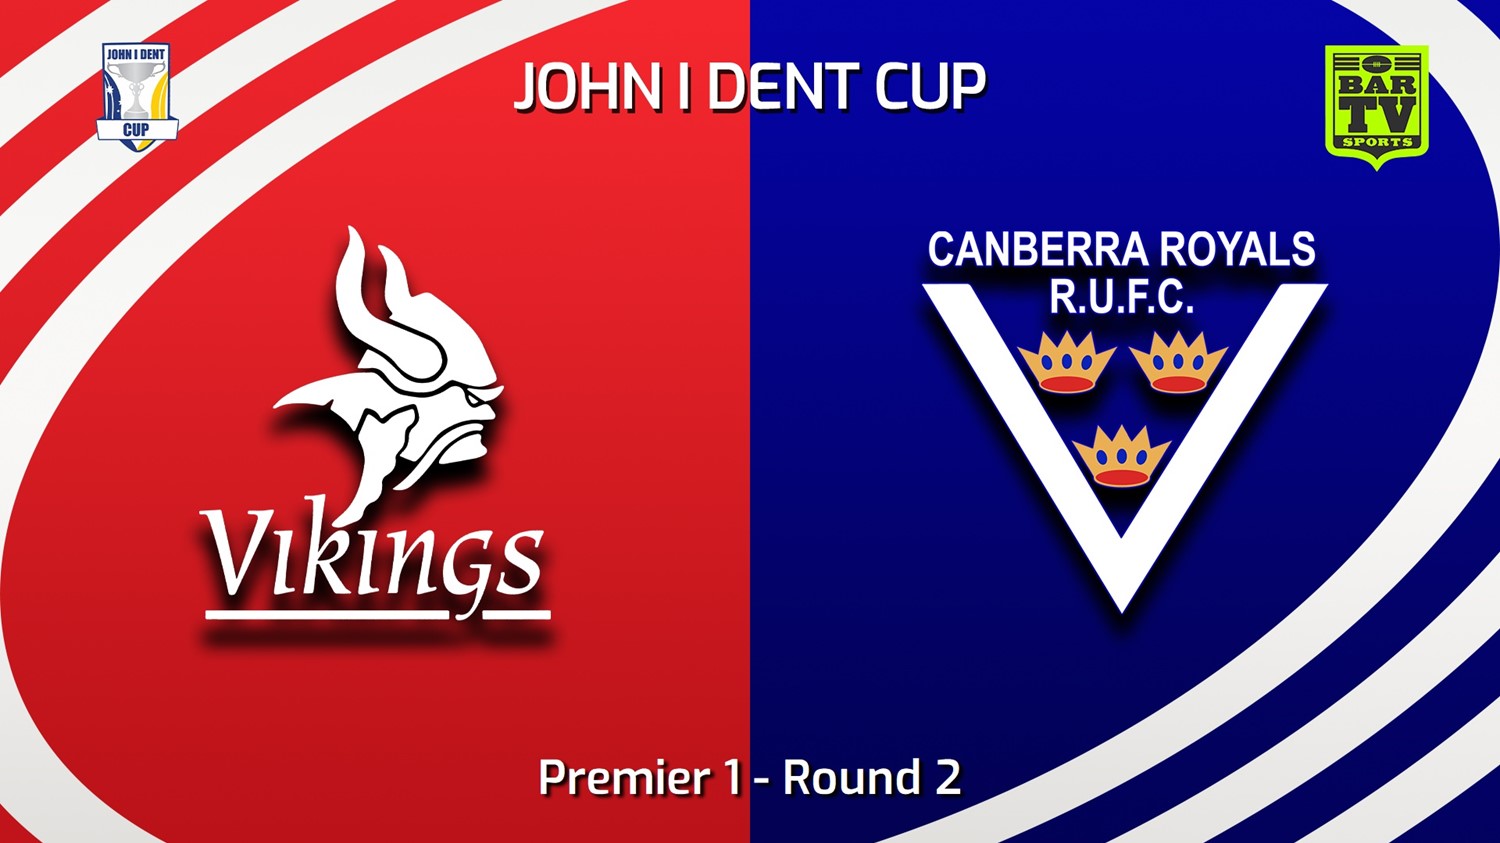 230422-John I Dent (ACT) Round 2 - Premier 1 - Tuggeranong Vikings v Canberra Royals Minigame Slate Image